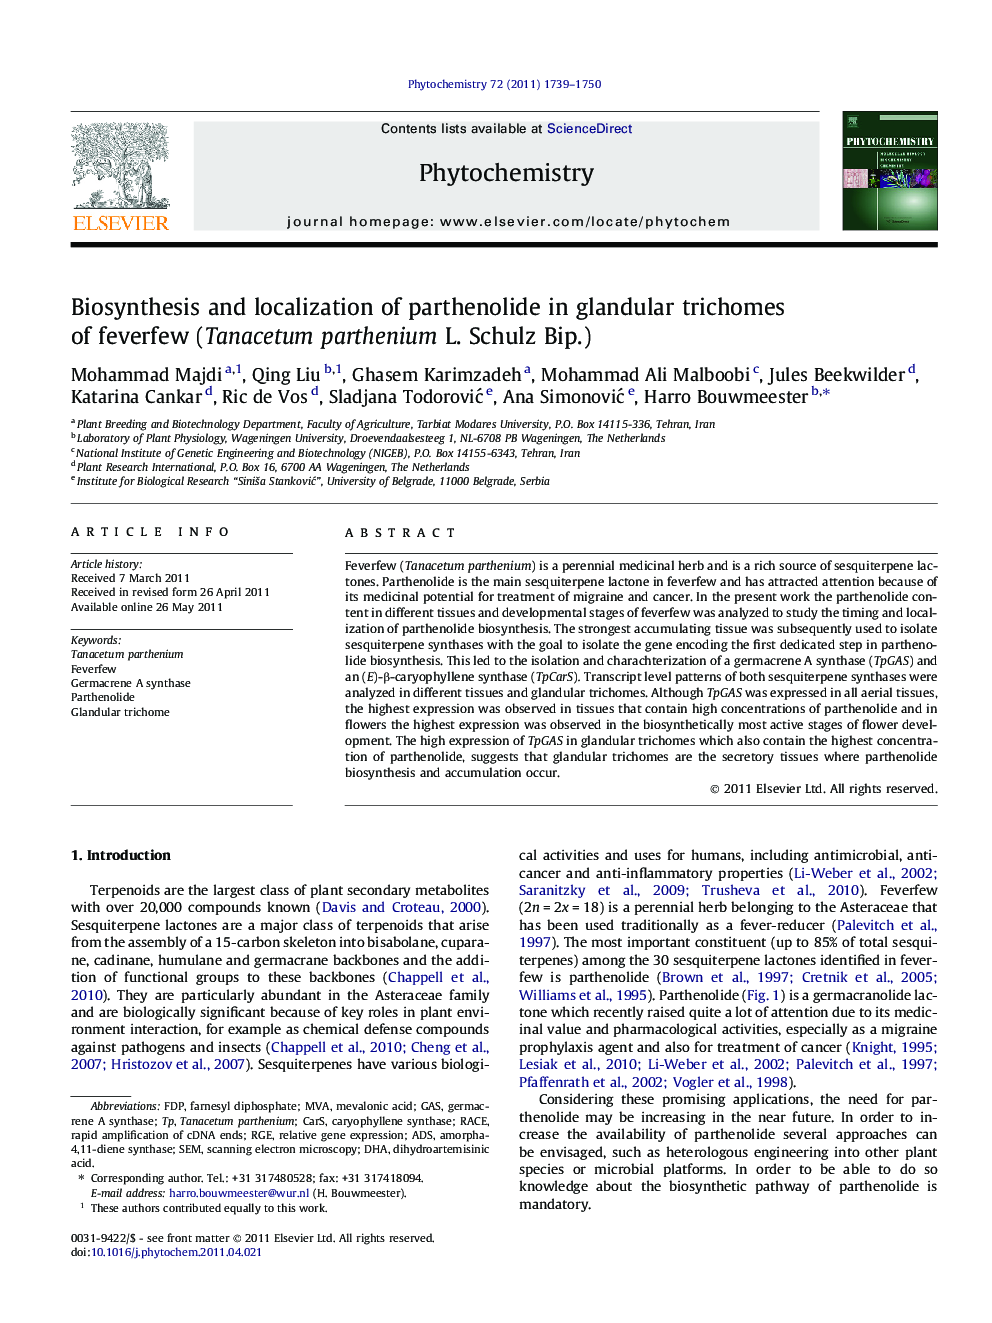 Biosynthesis and localization of parthenolide in glandular trichomes of feverfew (Tanacetum parthenium L. Schulz Bip.)